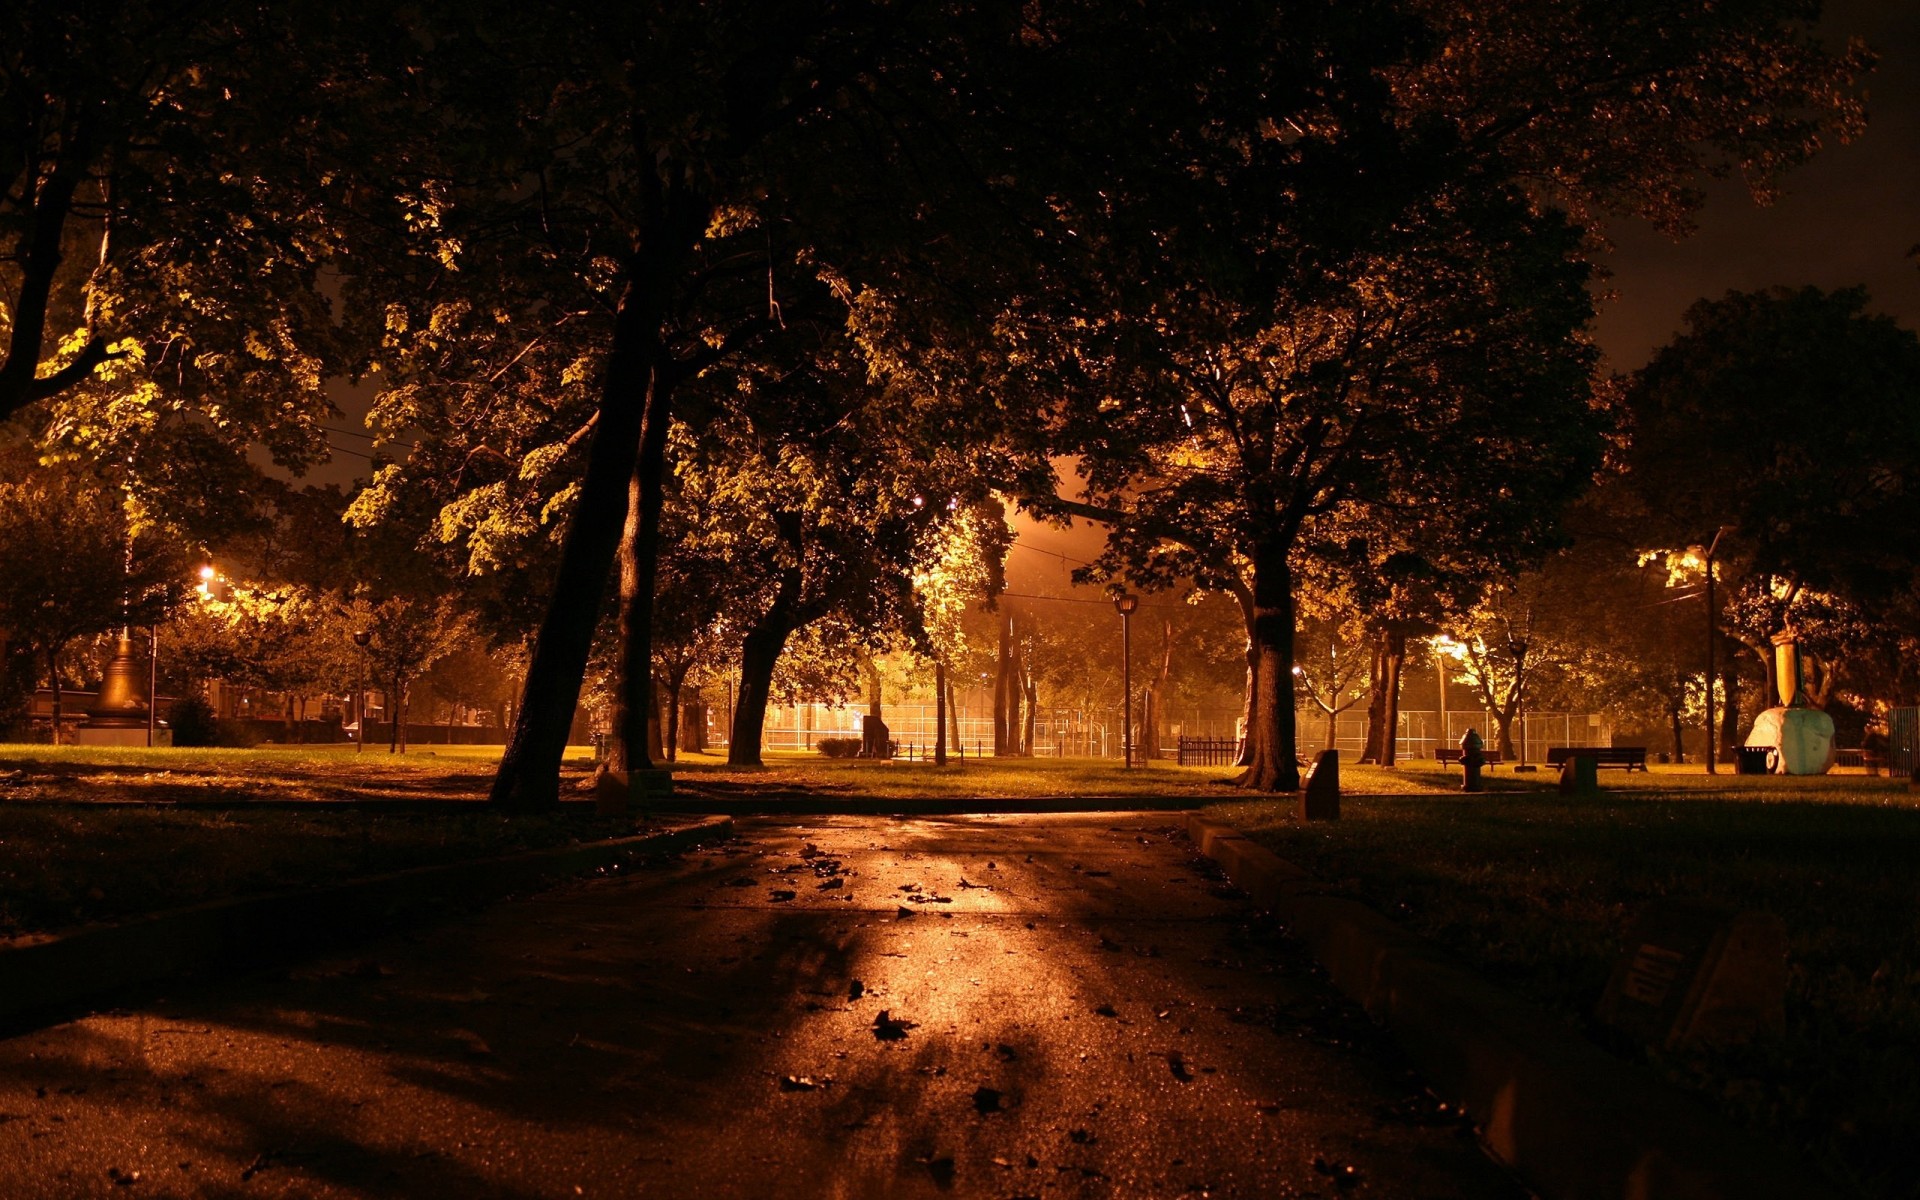 осень дерево свет рассвет улица дорога осень туман пейзаж закат темный туман зима